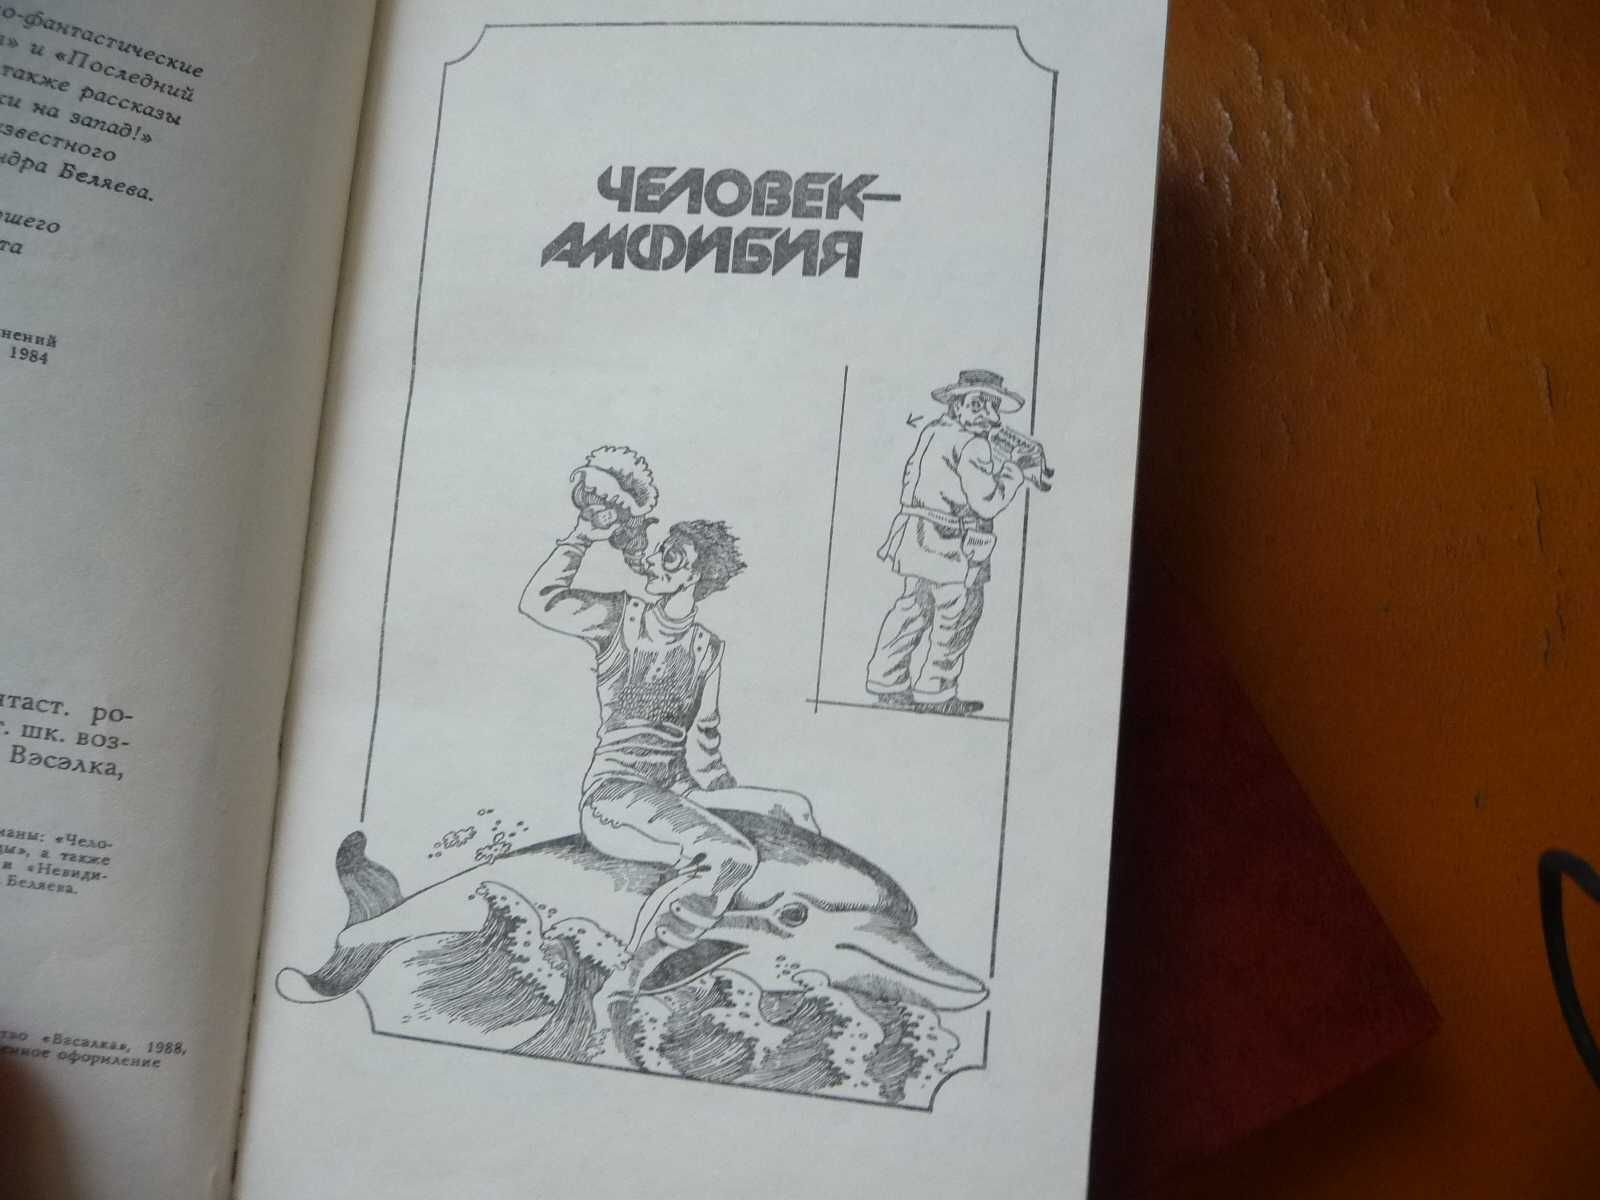 Две книги А.Беляева :"Человек-амфибия" и "Избранное"